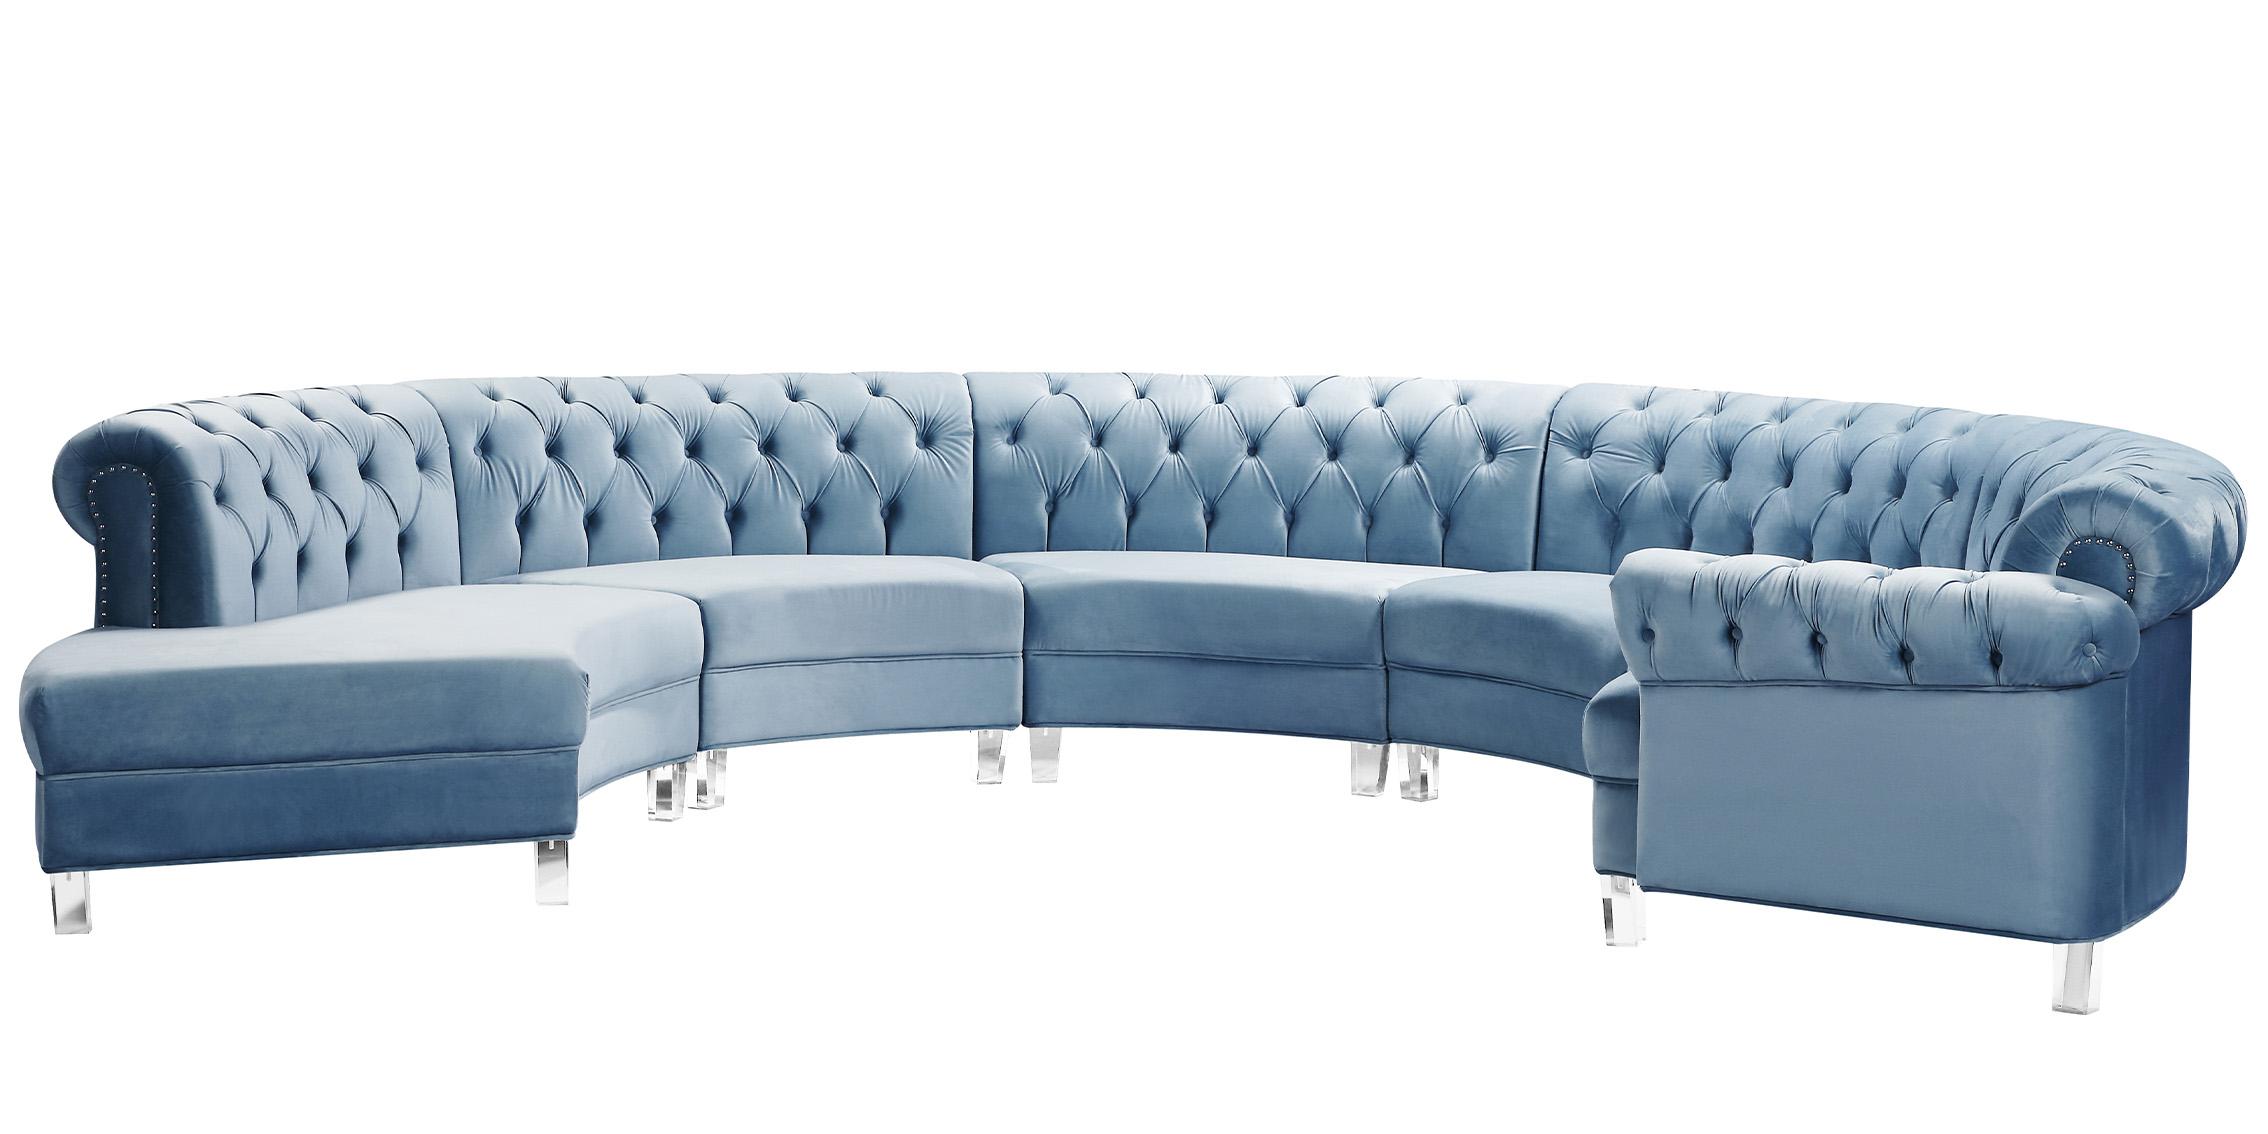 

    
Meridian Furniture ANABELLA 697Skyblu-5 Sectional Sofa Light Blue 697Skyblu-Sec-5PC
